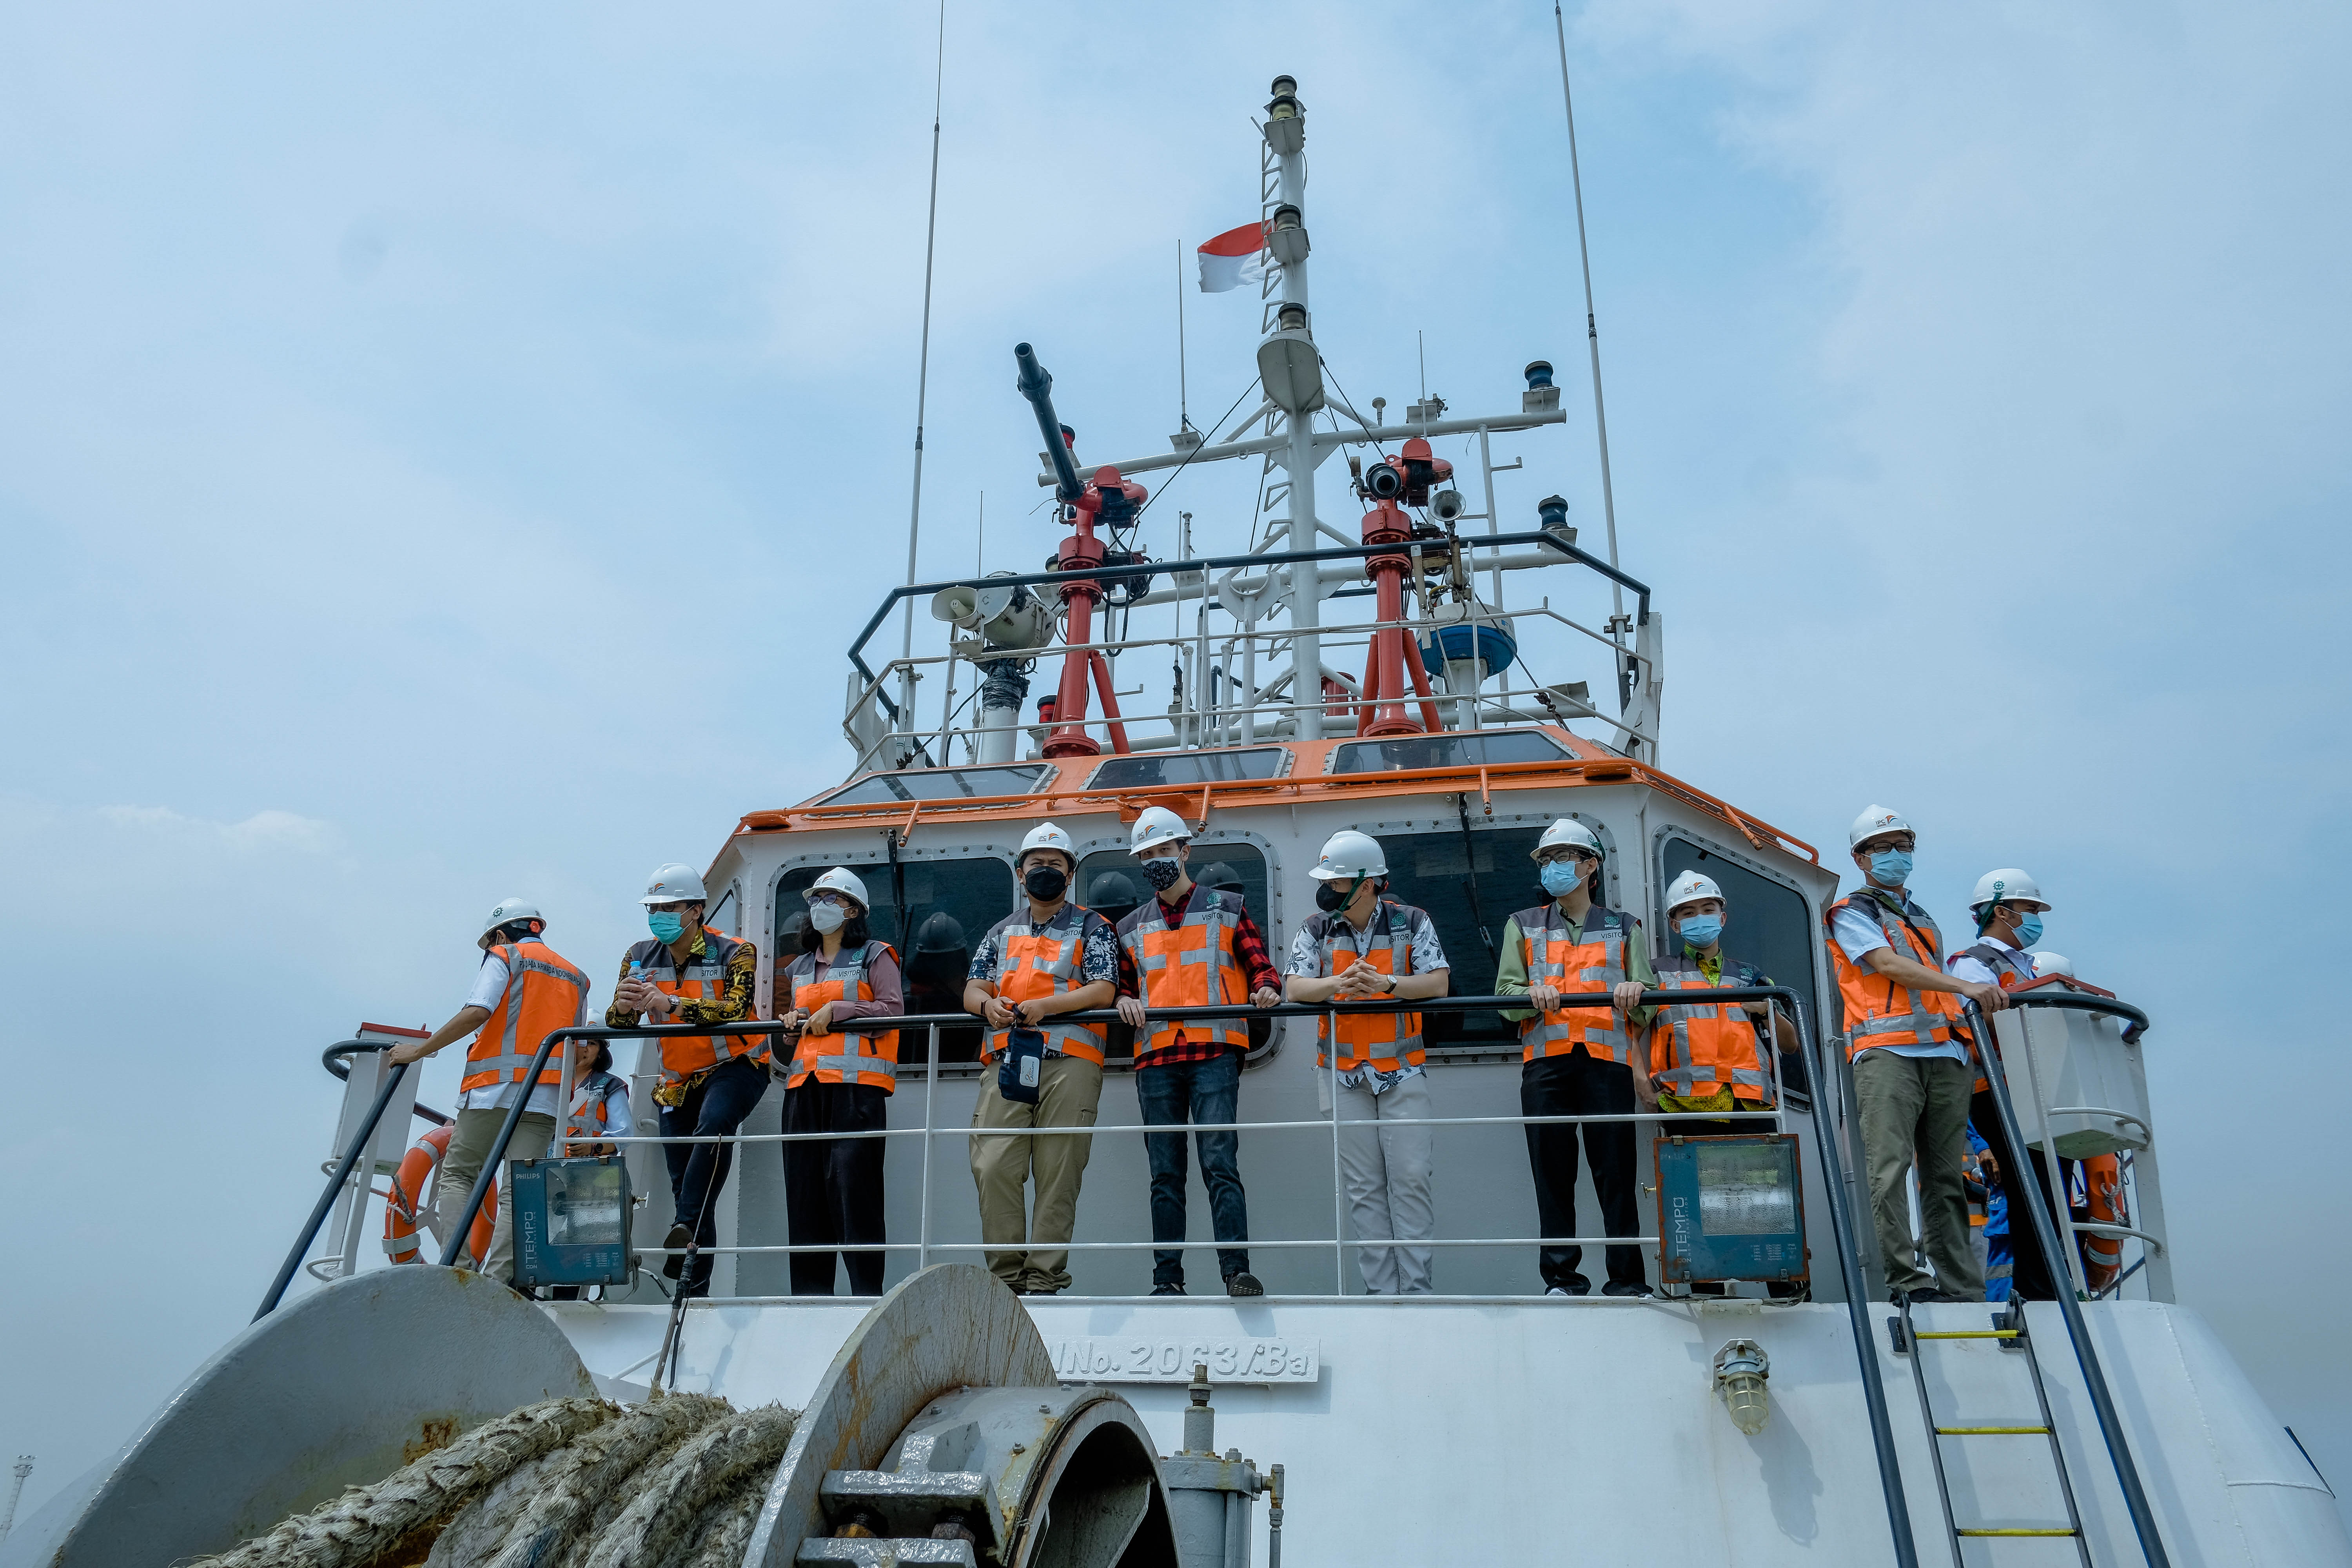 IPCM Jasa Armada Indonesia (IPCM) Catat Laba Semester I-2022 Naik 7,01 Persen Jadi Rp64,7 M